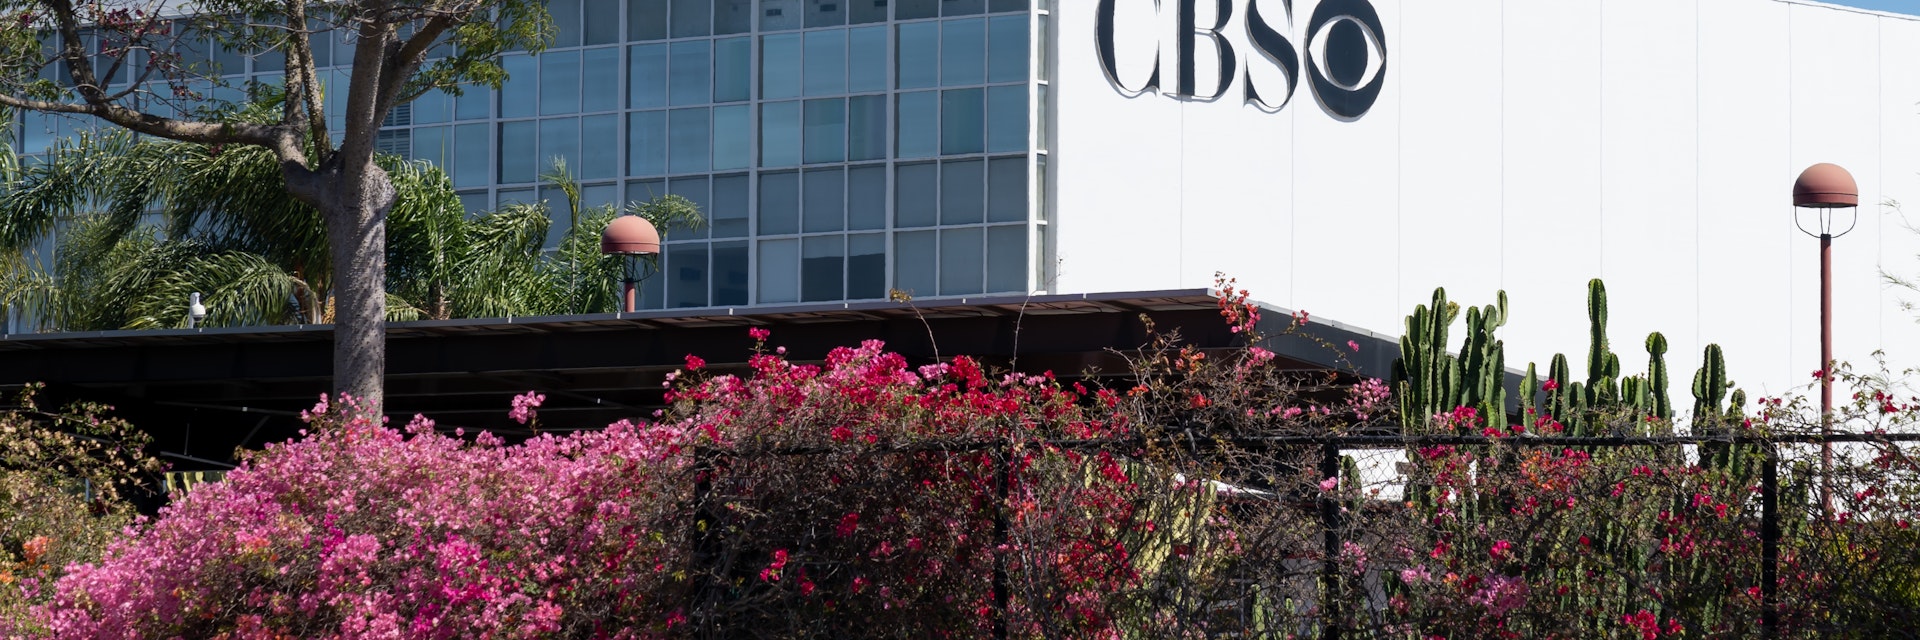 CBS Television City in Los Angeles, California.